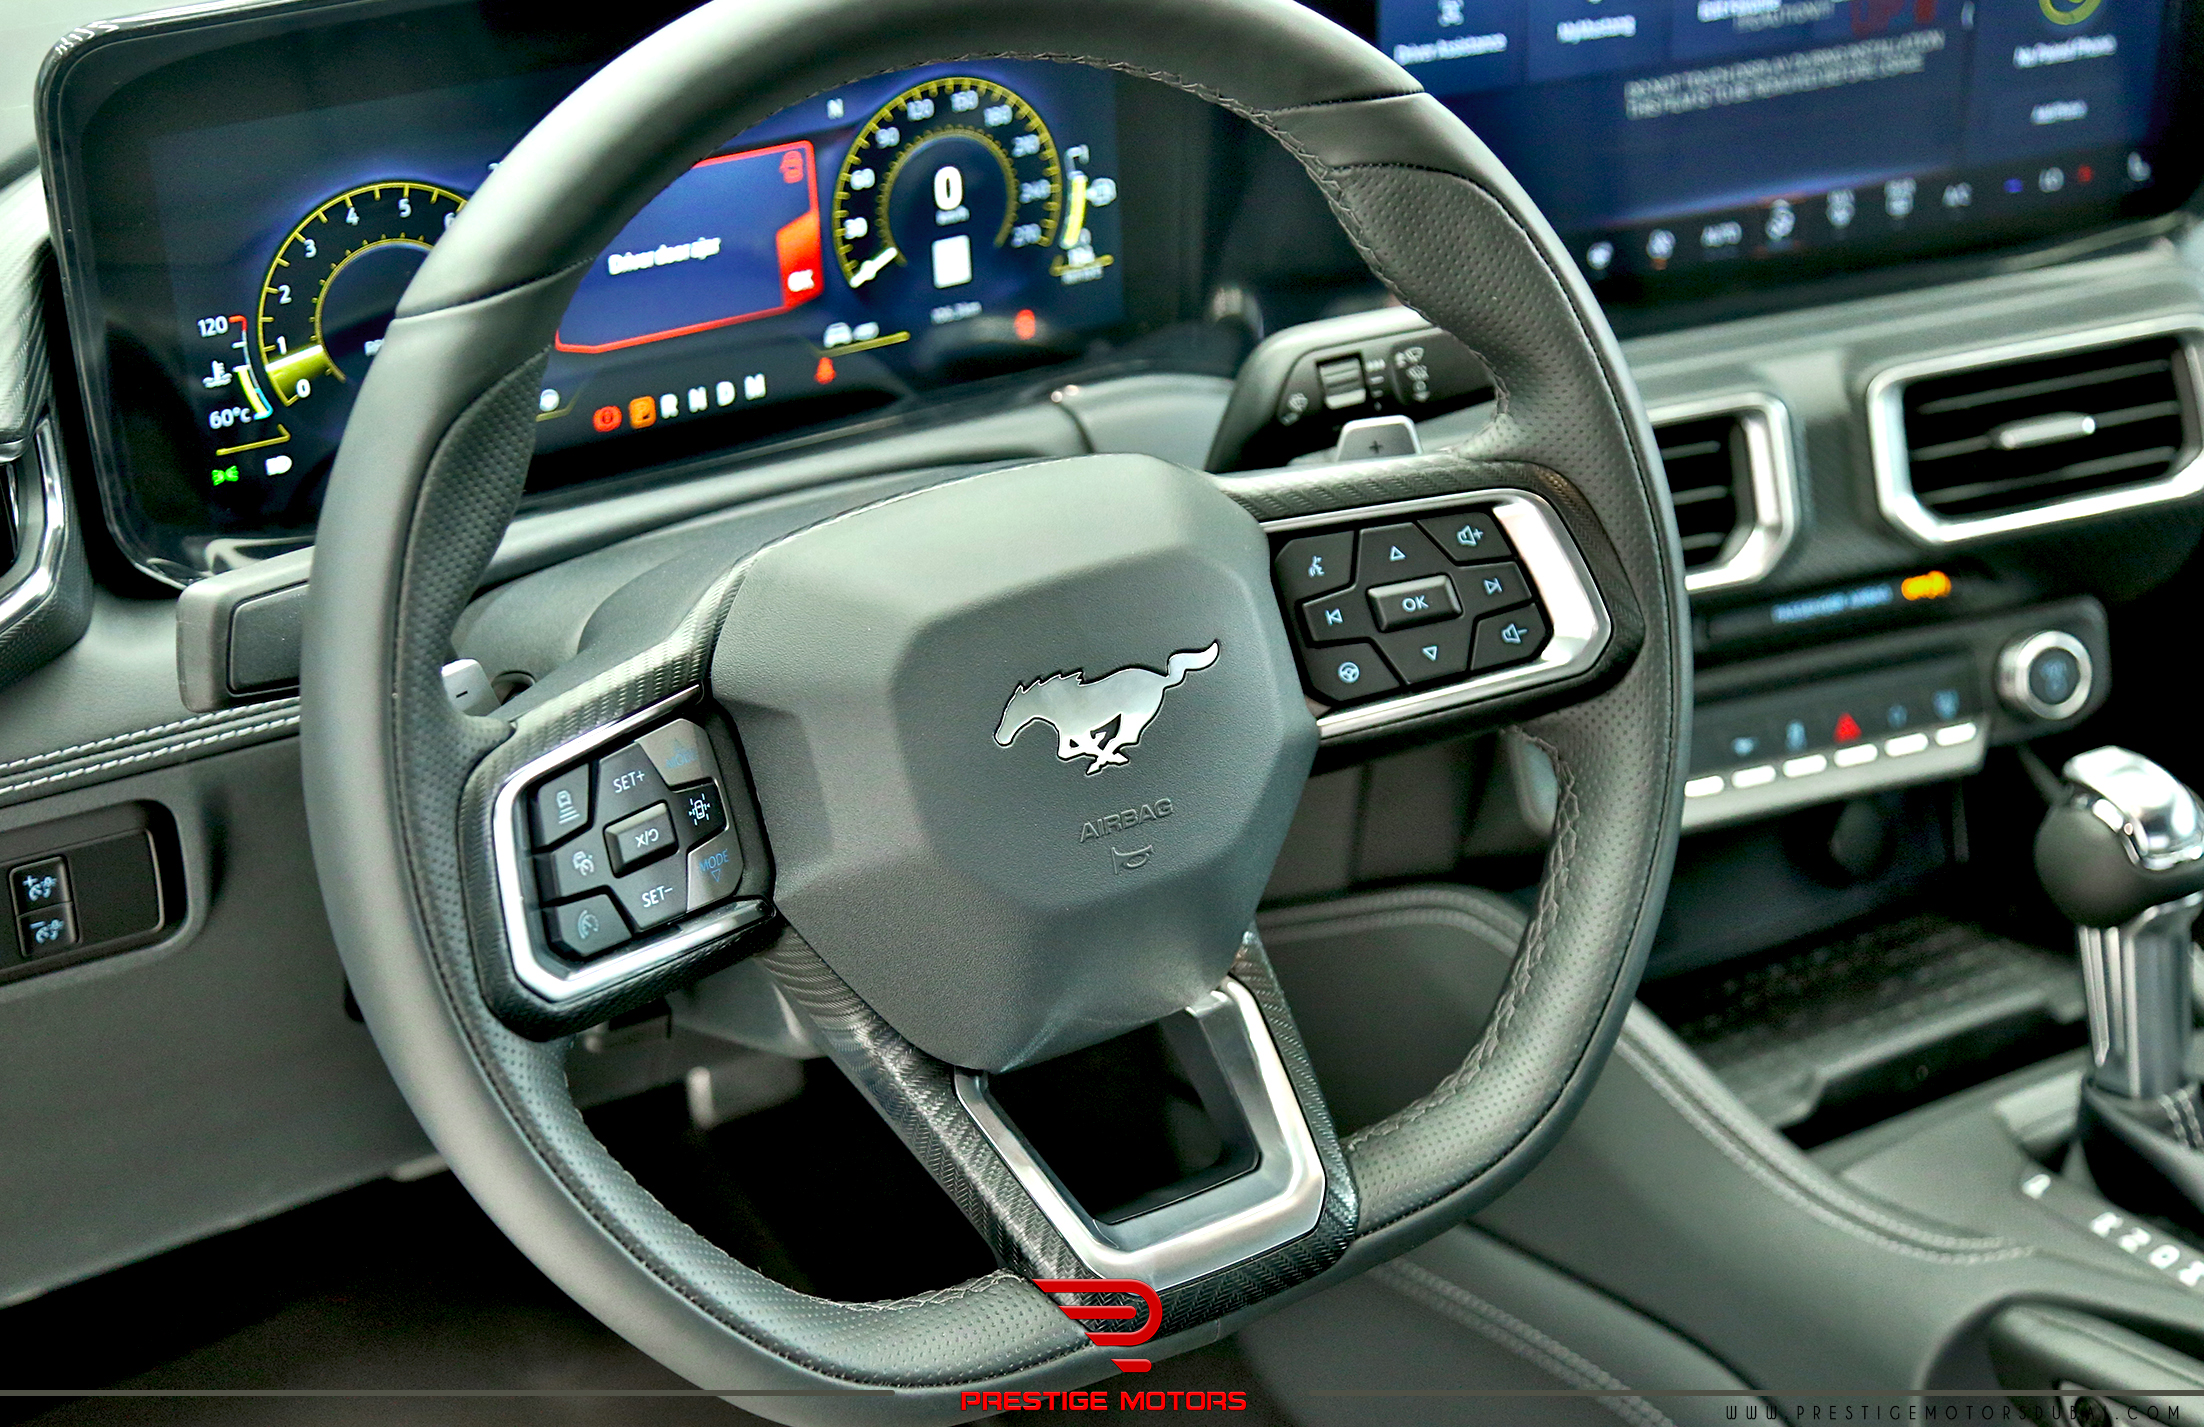 Ford Mustang GT Premium 2024 For Local Registration +10% Prestige Motor Dubai